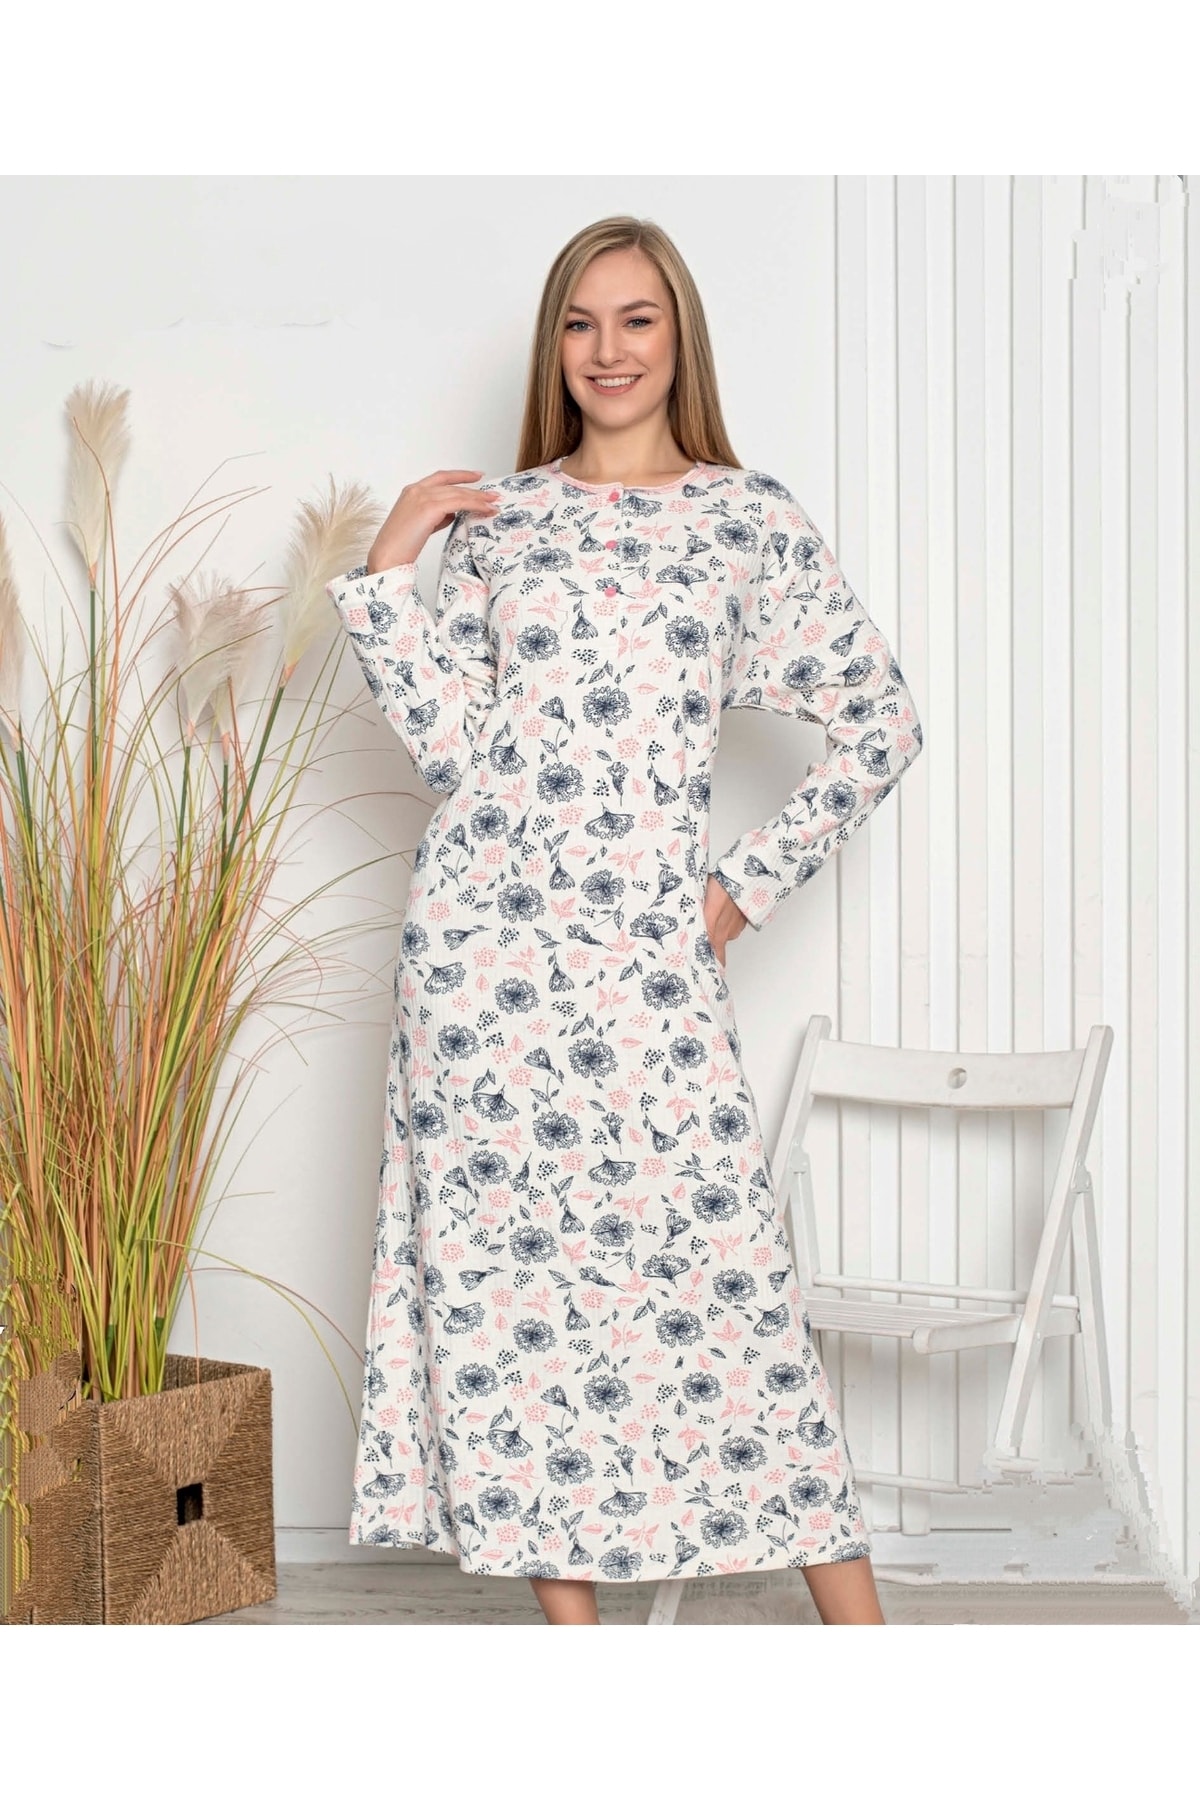 Flamingo Shop Gecelik Pijama Ev Home Elbise Kıyafet Rahat